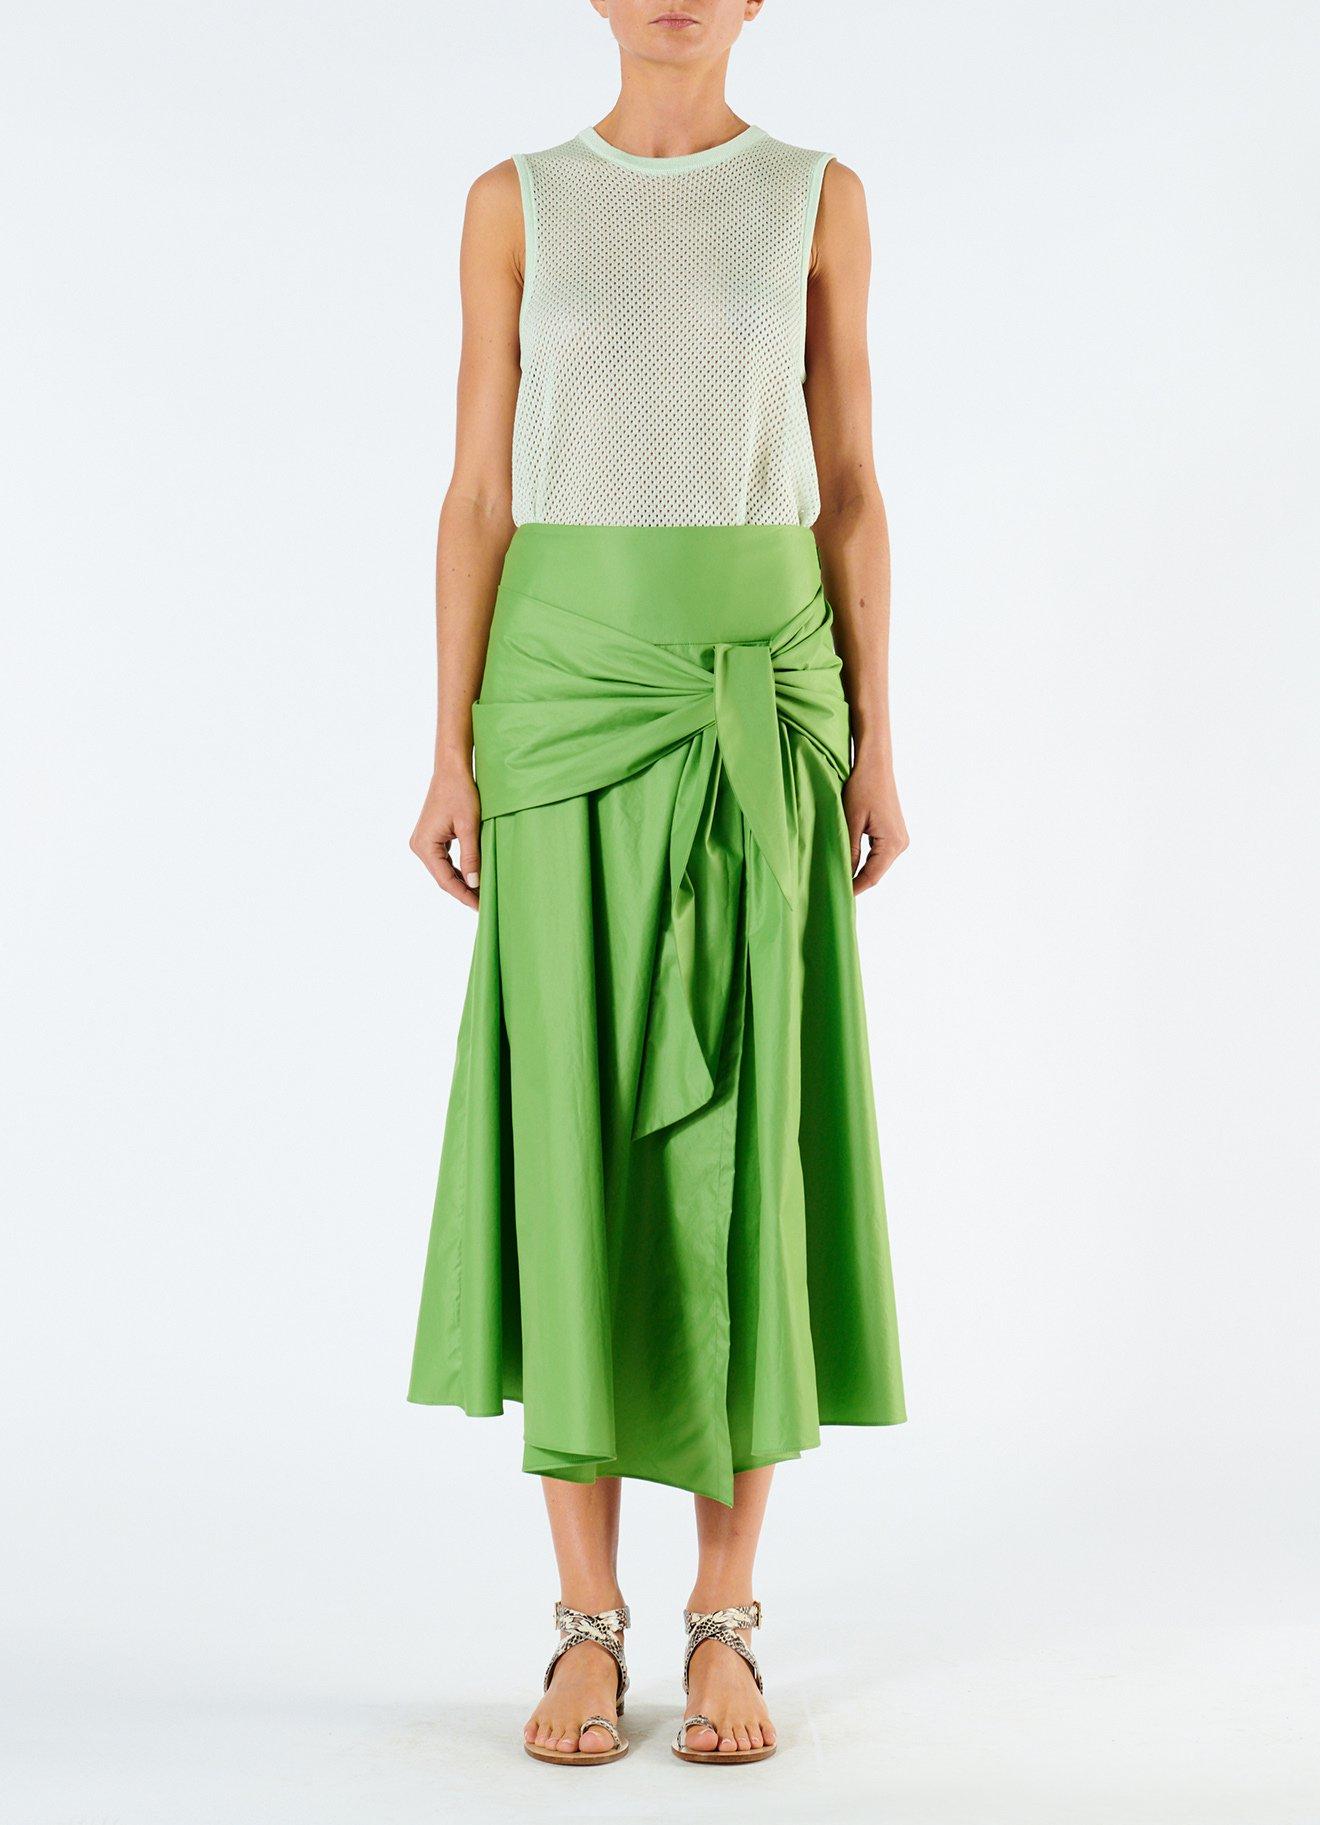 Tibi Synthetic Glossy Plainweave Tie-front Midi Skirt in Green - Lyst